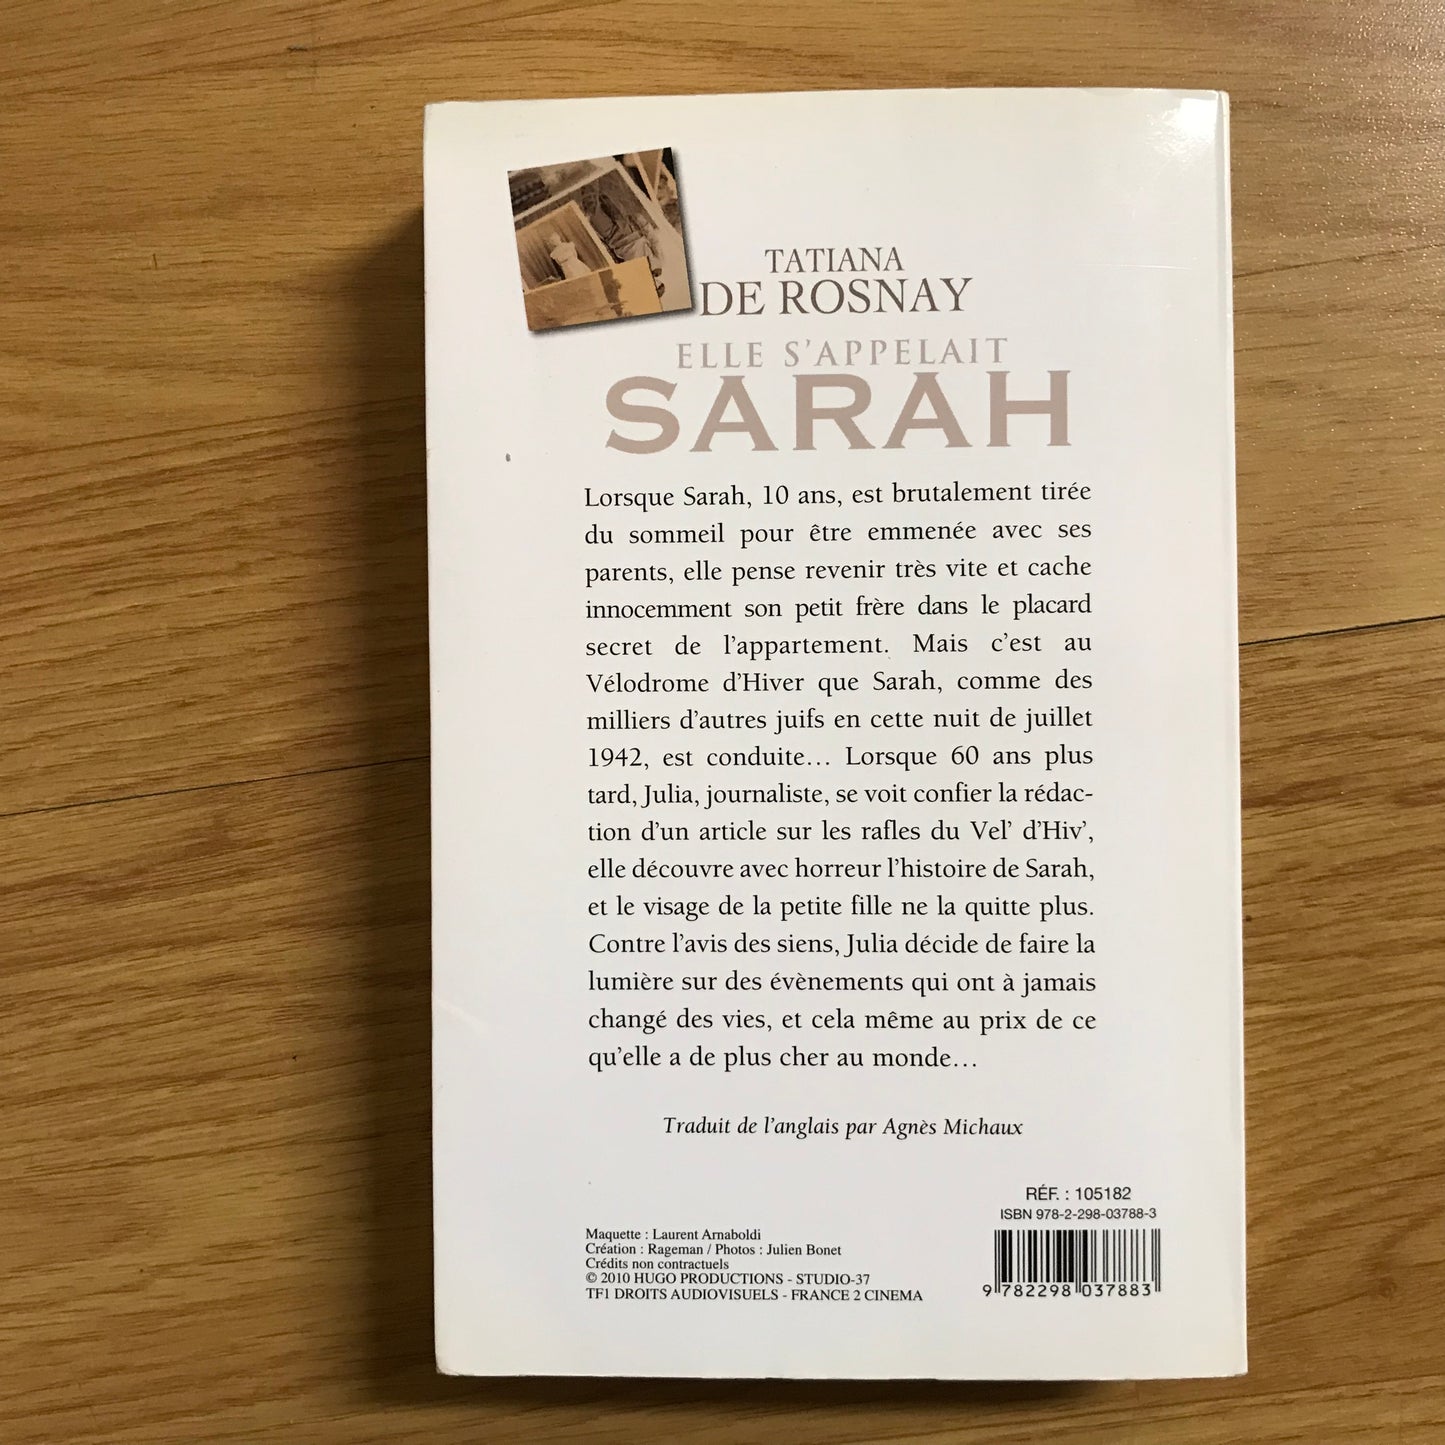 Rosnay de, Tatiana - Elle s’appelait Sarah